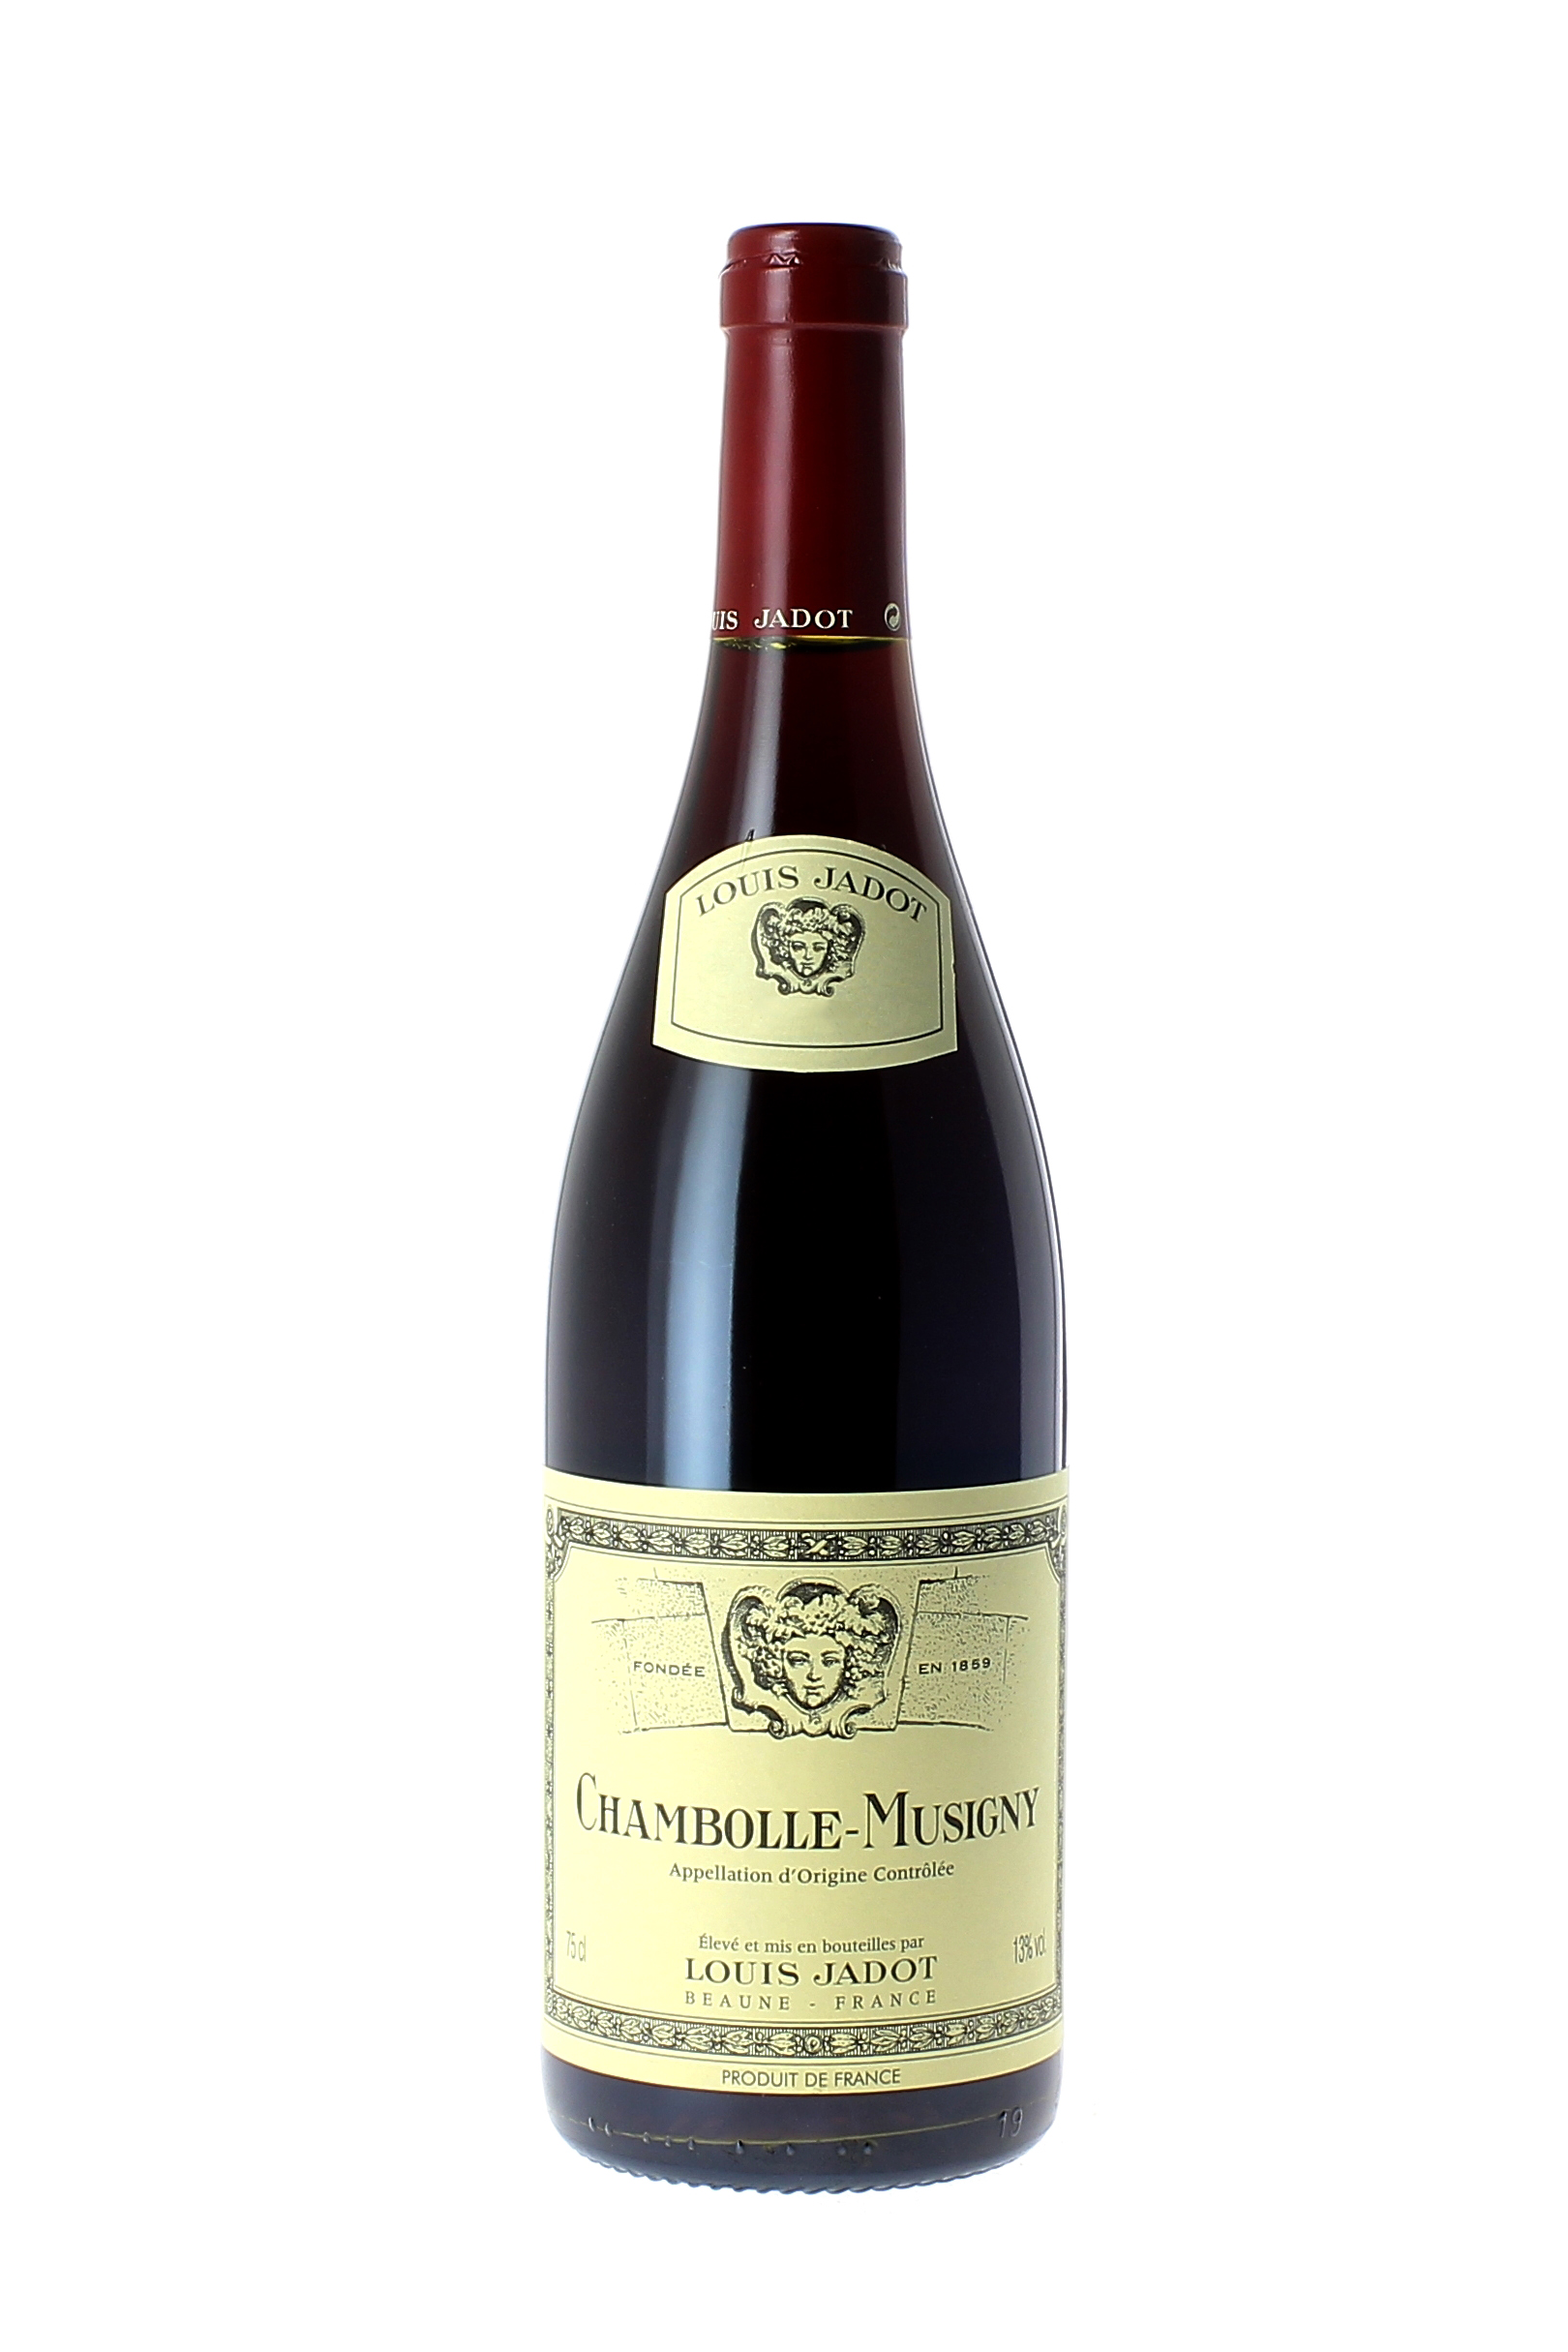 Chambolle musigny 1er cru les charmes 1979  JADOT Louis, Bourgogne rouge